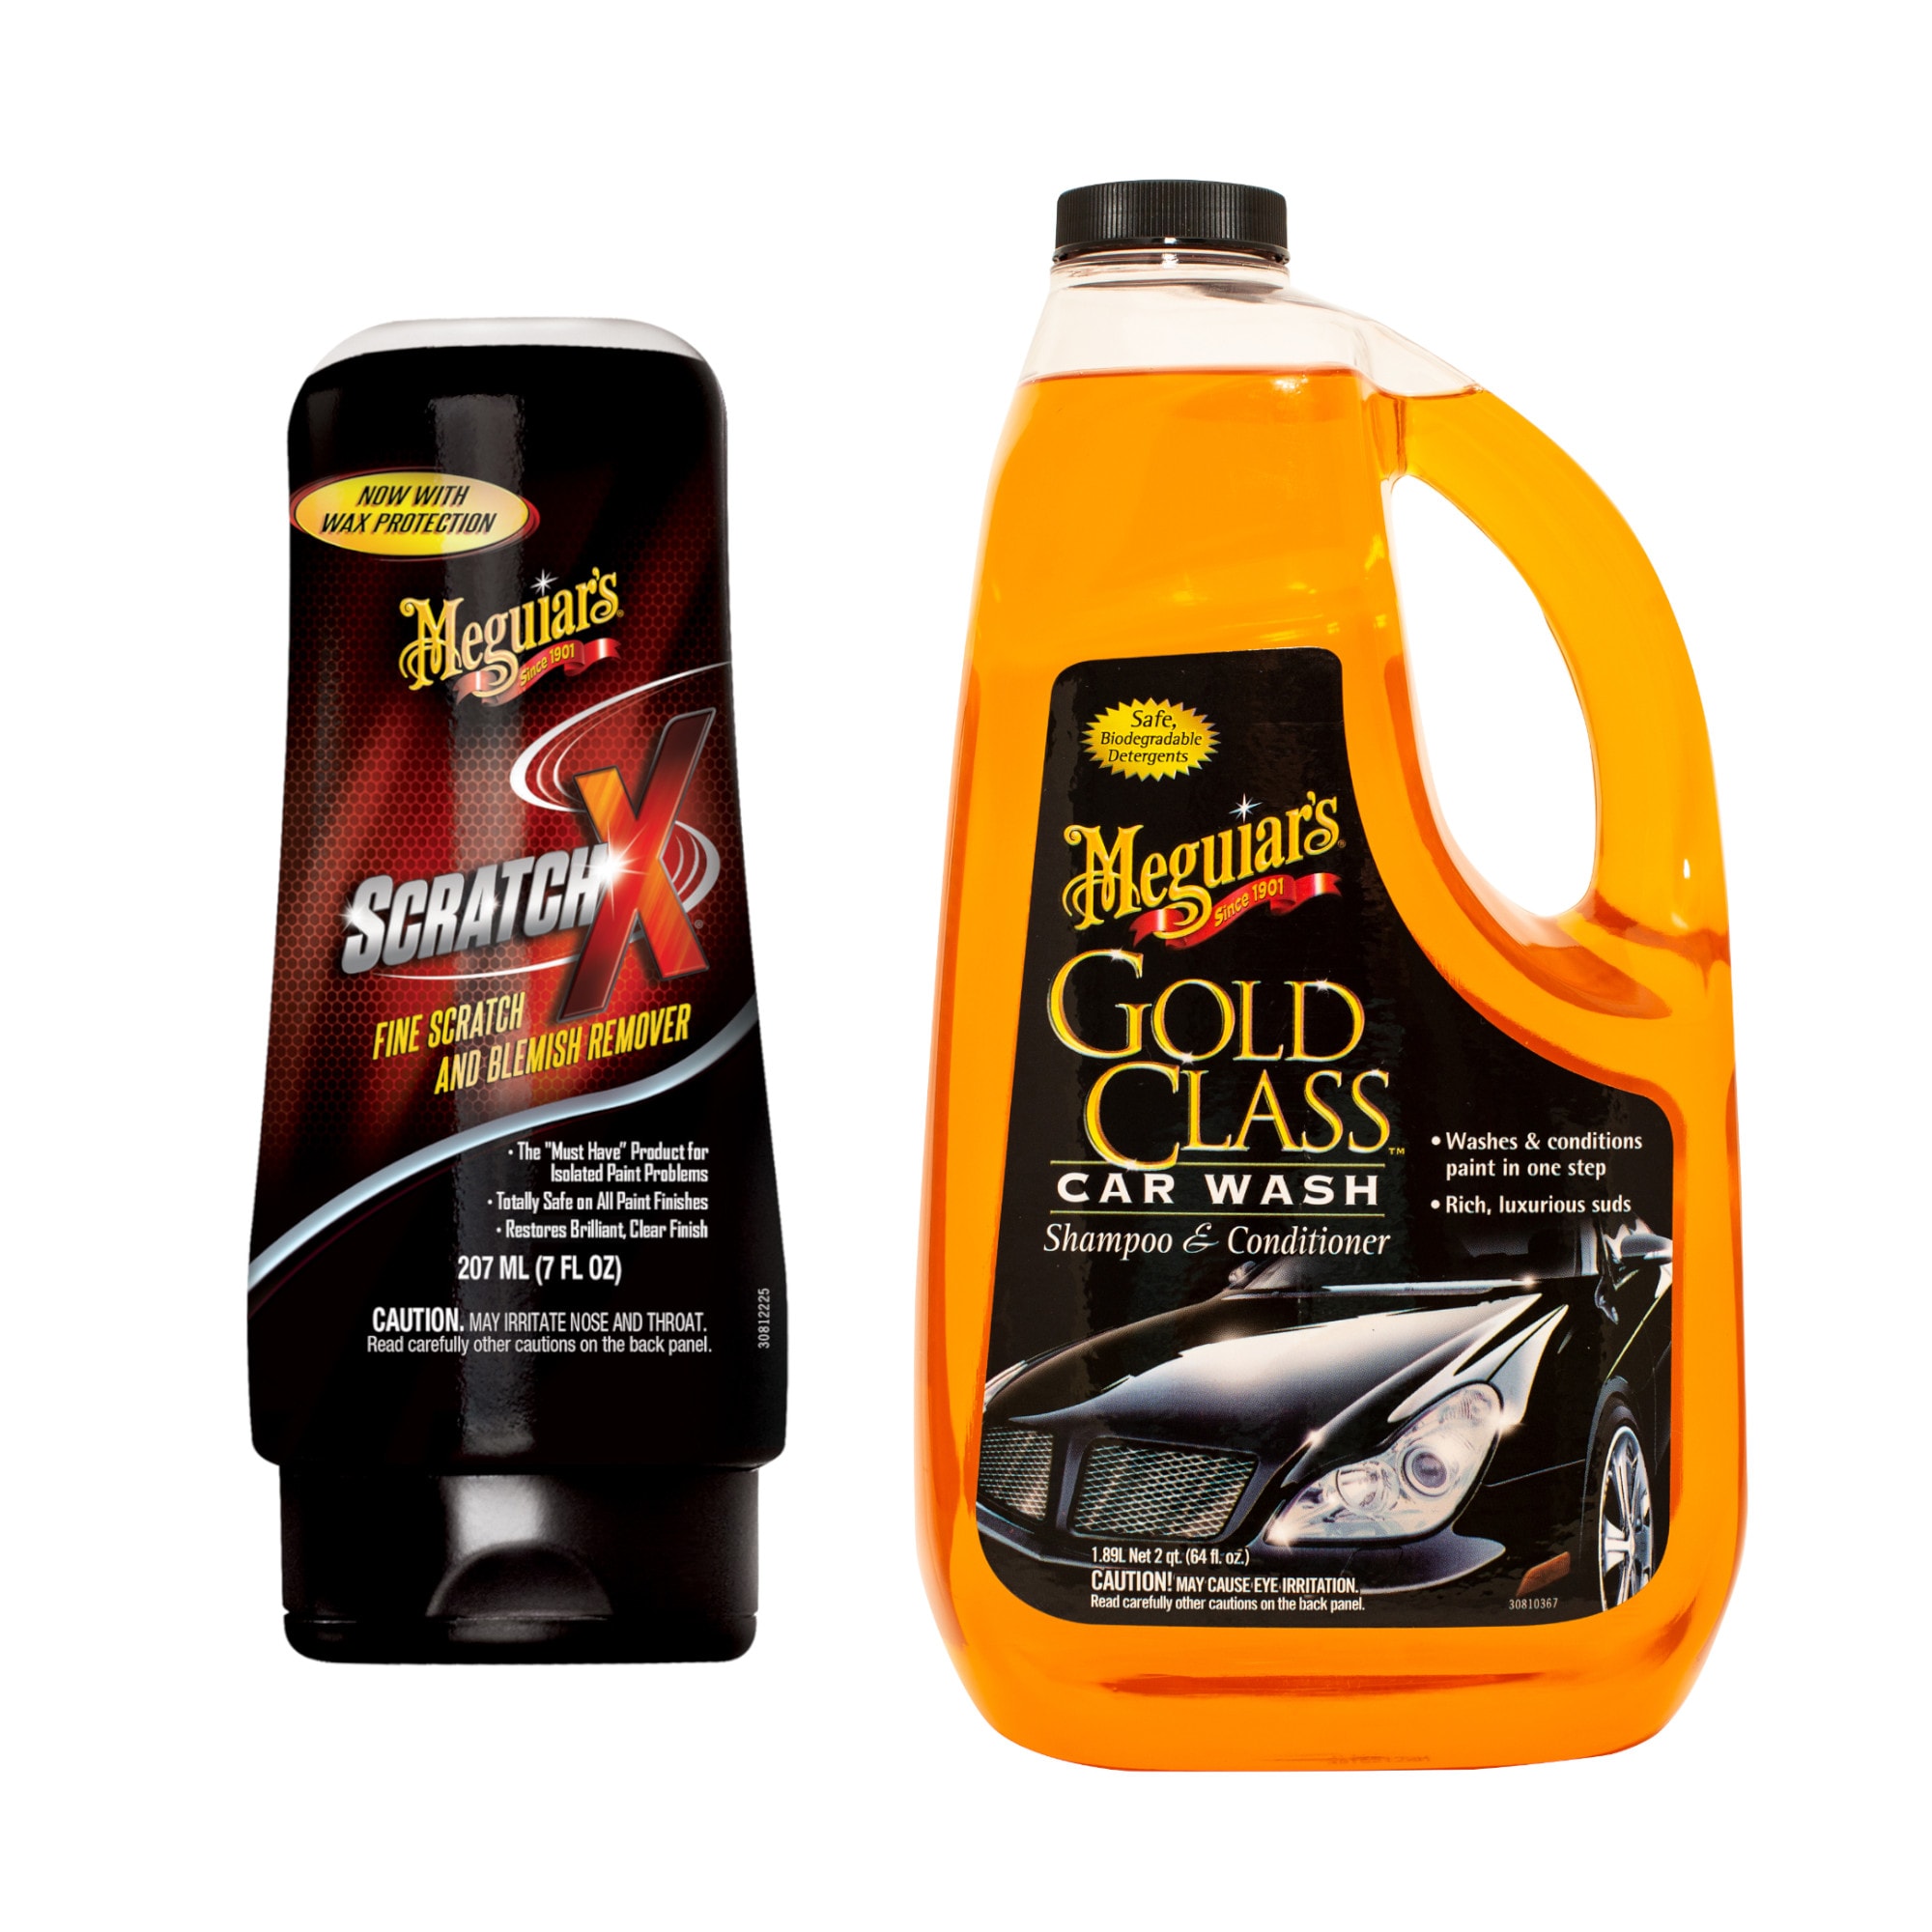 64 oz. Gold Class Car Wash Shampoo & Conditioner